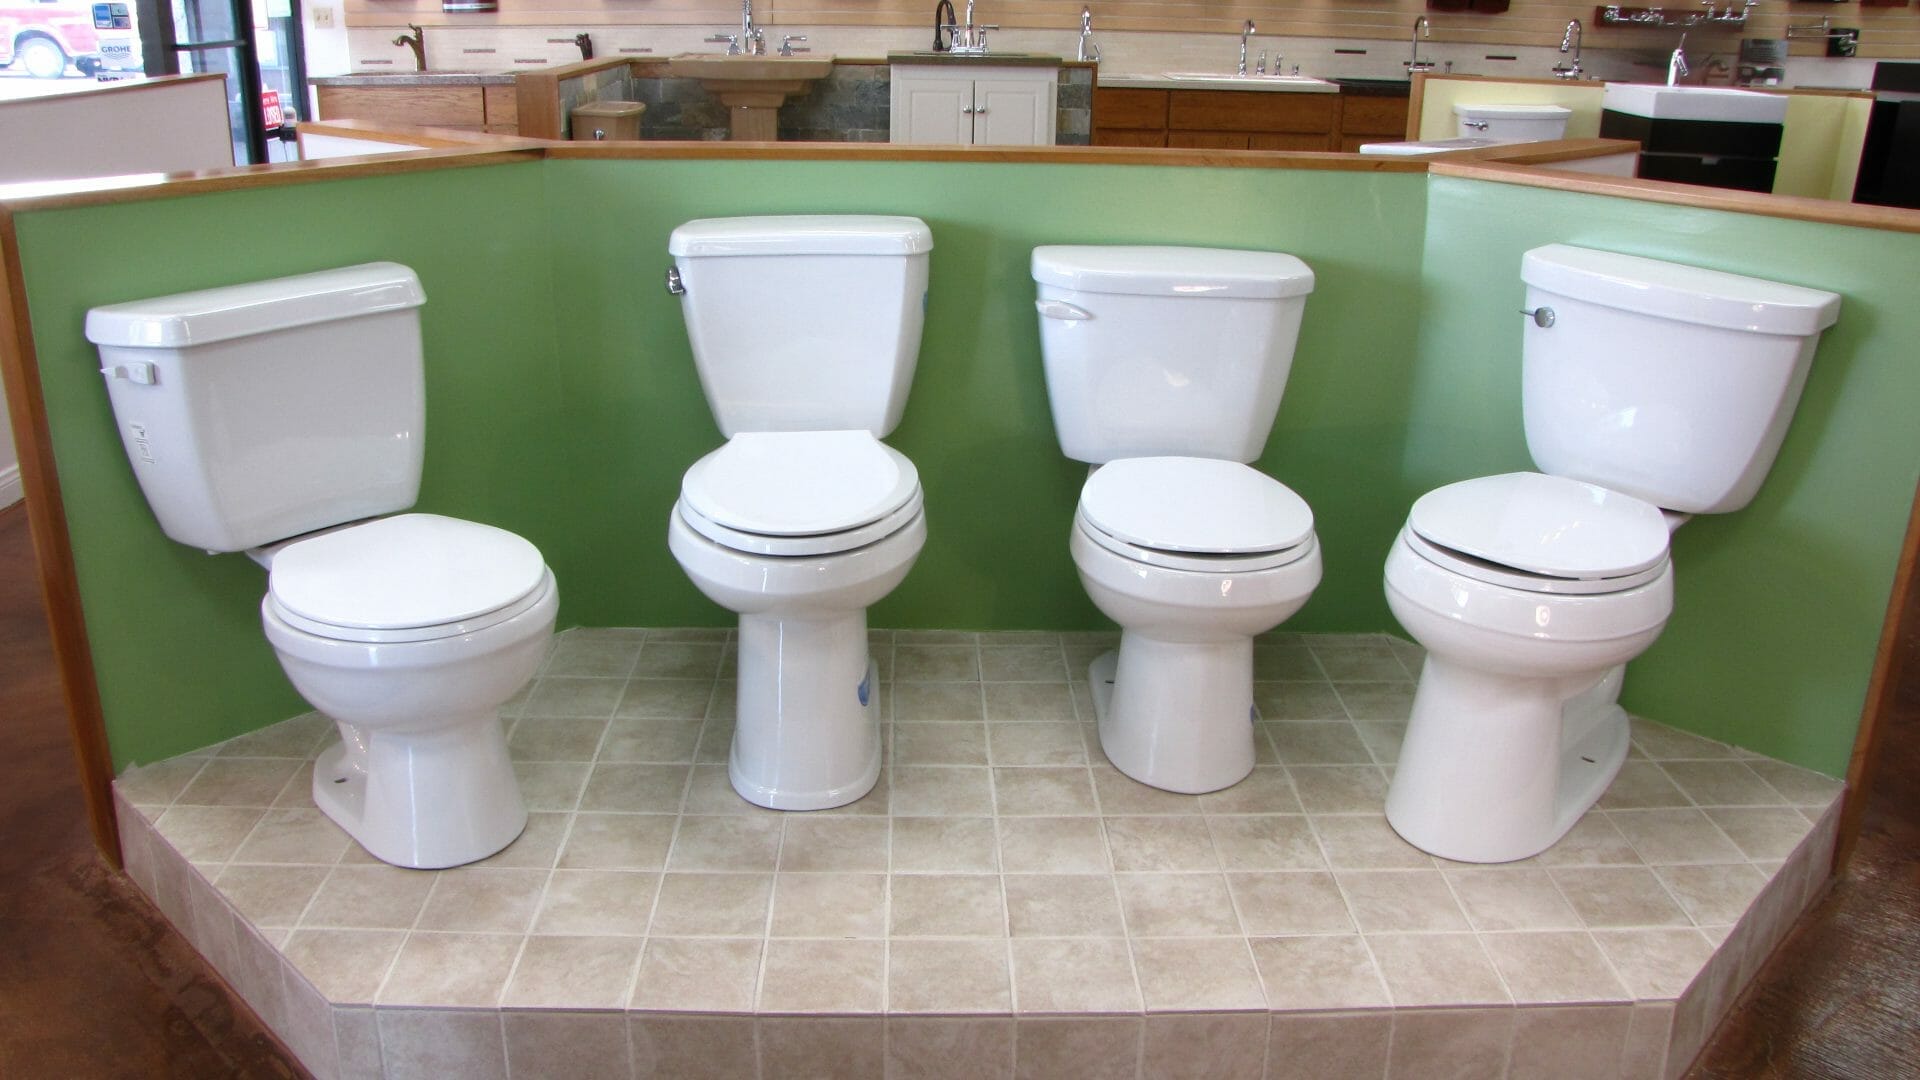 Plumbers Picks Toilets Part 2: One-Piece Toilet or Two-Piece Toilet